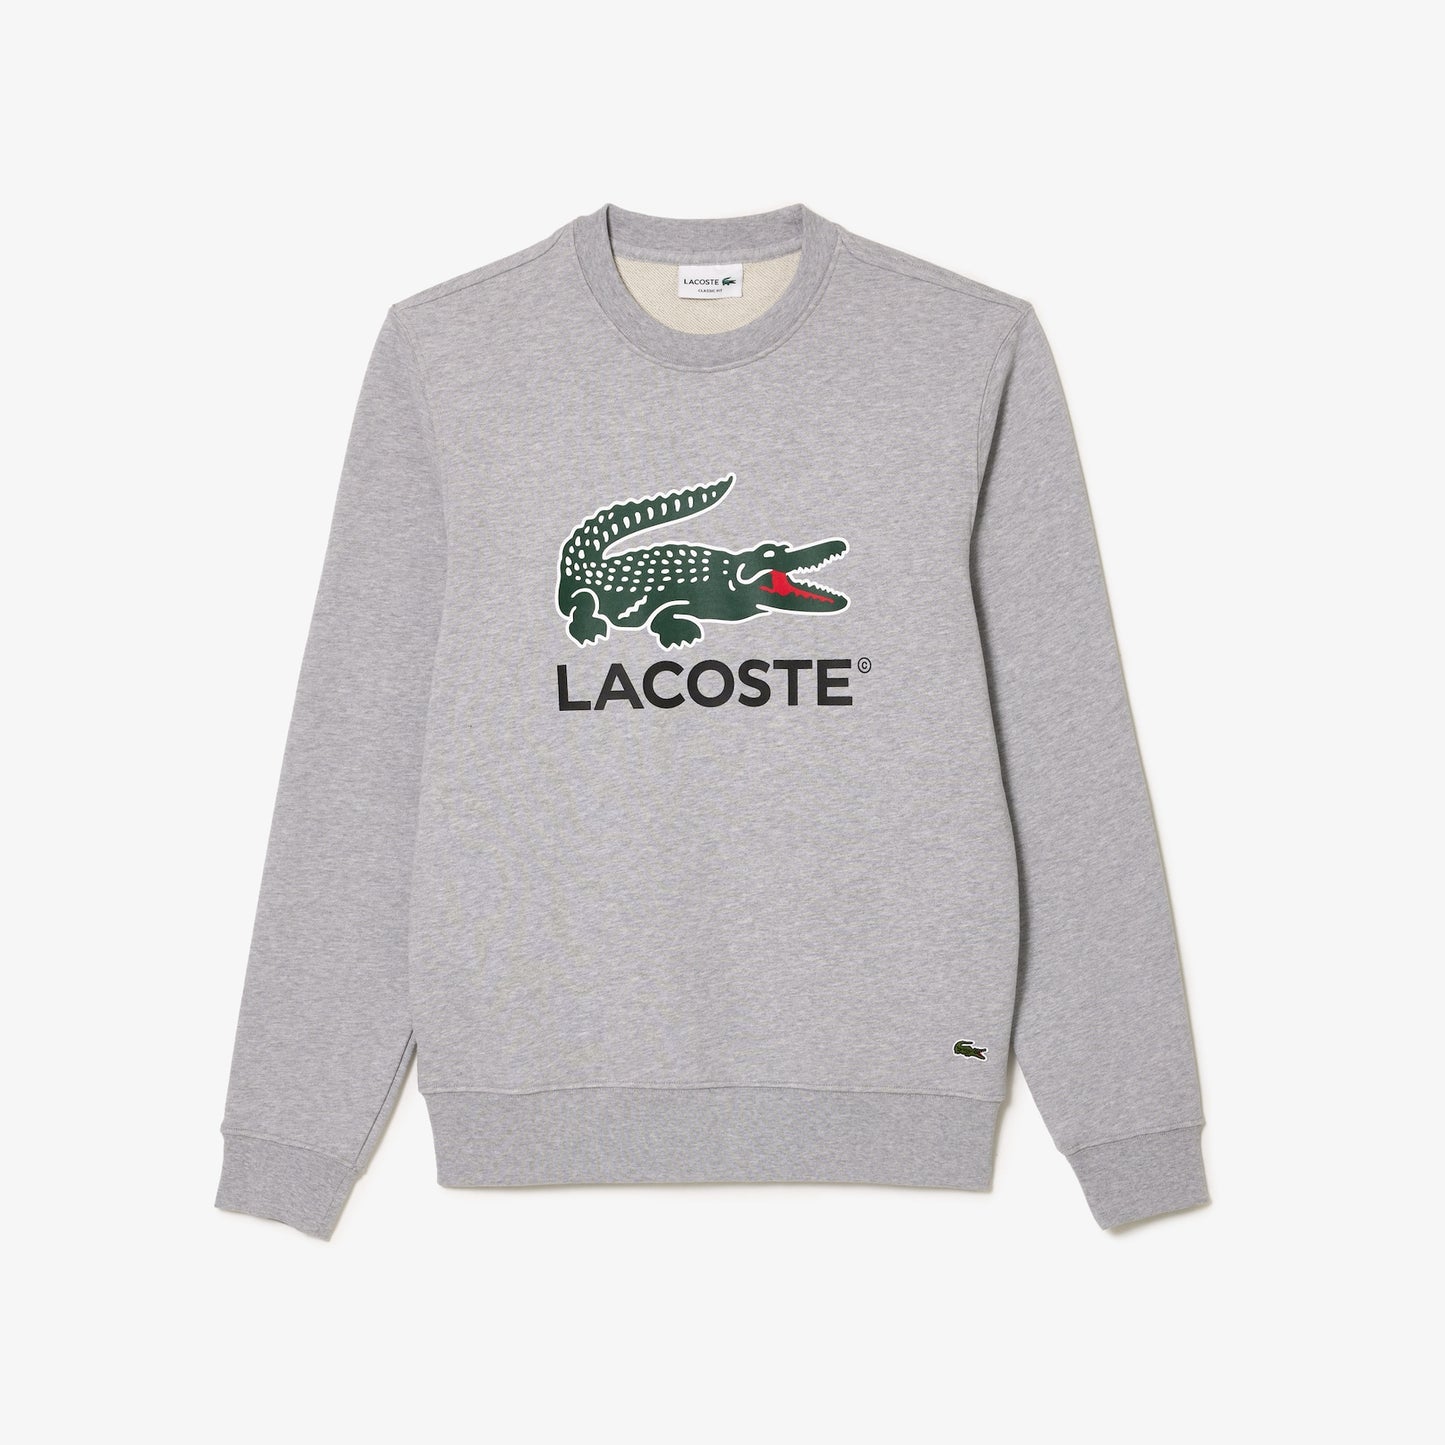 Lacoste - Men's Classic Fit Cotton Fleece Sweatshirt - Gray